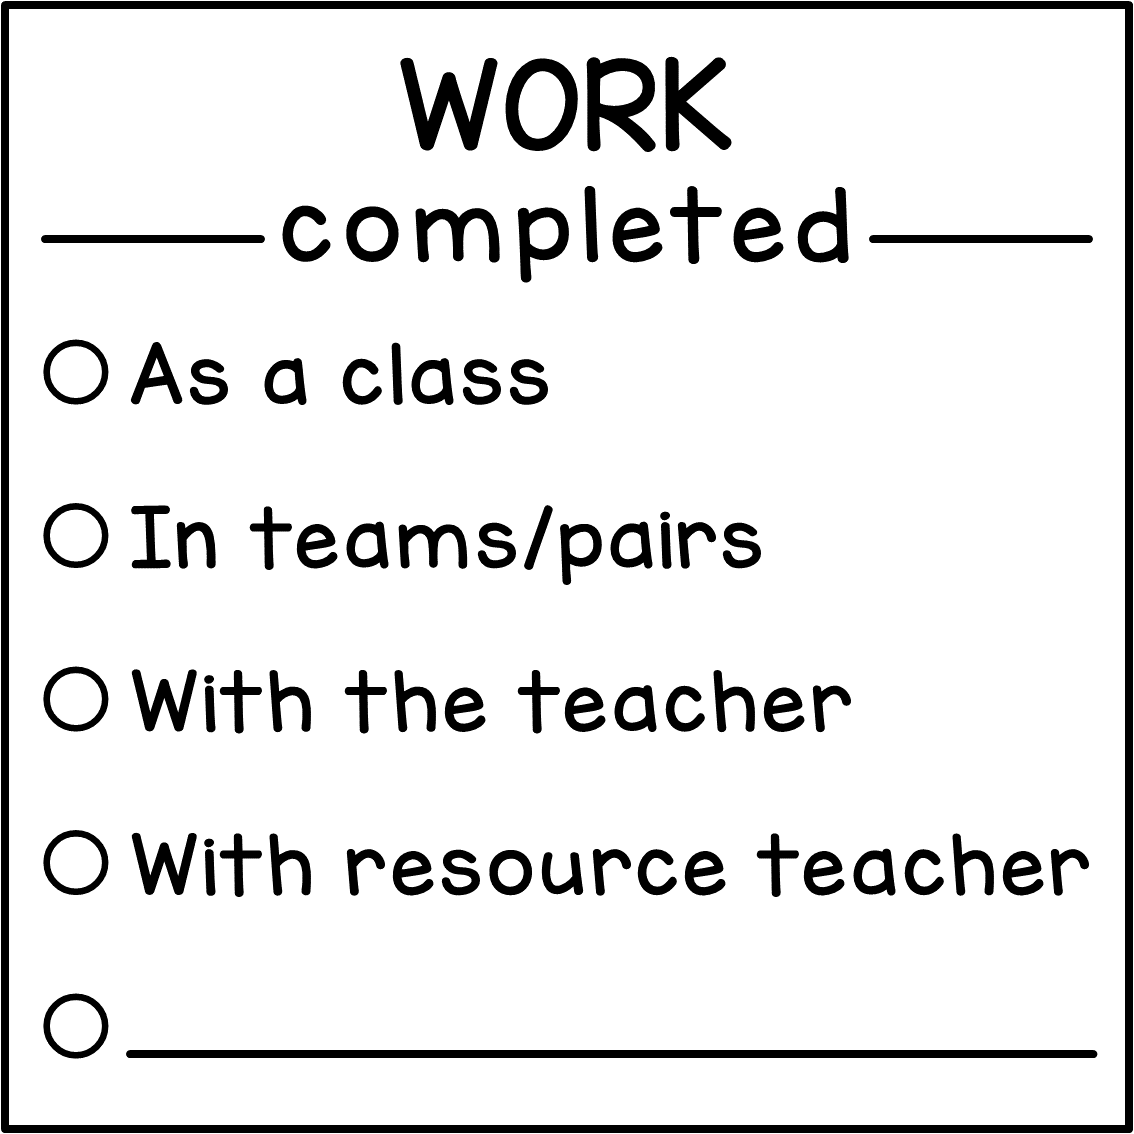 Work completed (checklist)